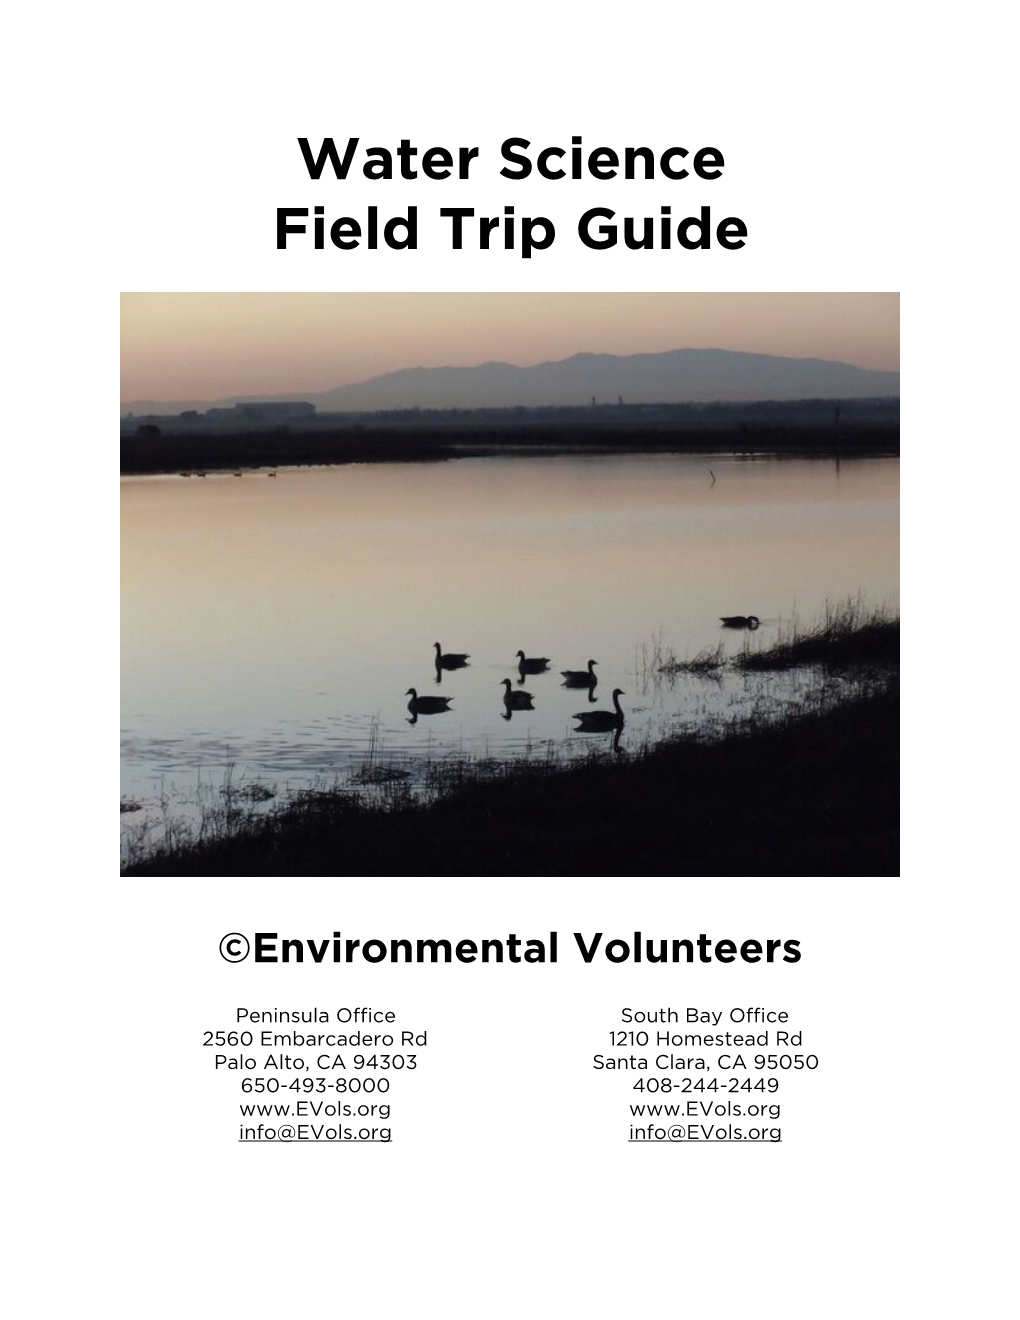 Water Science Field Trip Guide